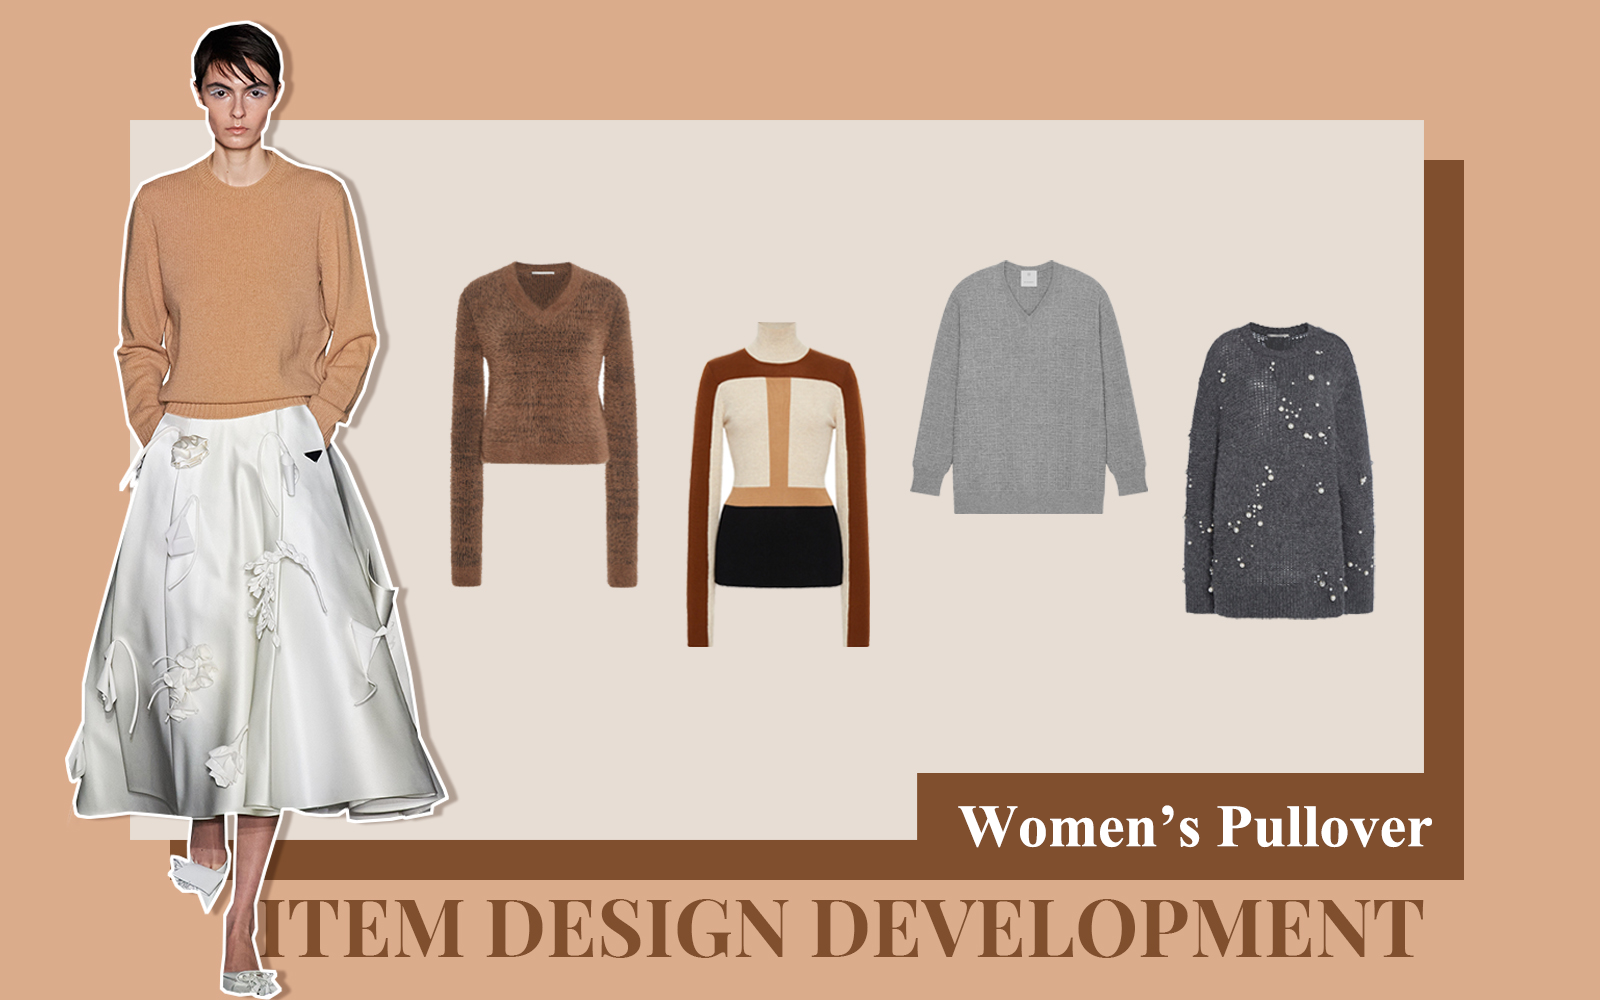 Elegant Lady -- The Design Development of Women's Pullover